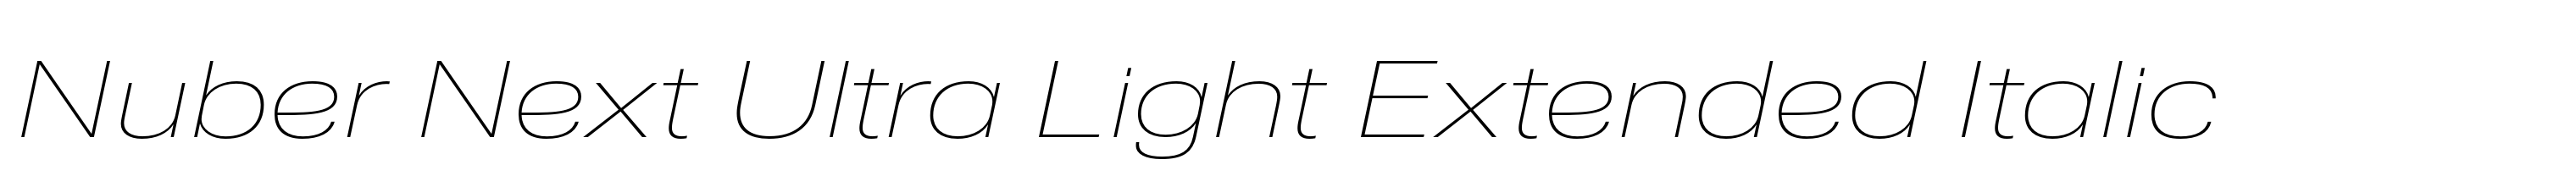 Nuber Next Ultra Light Extended Italic